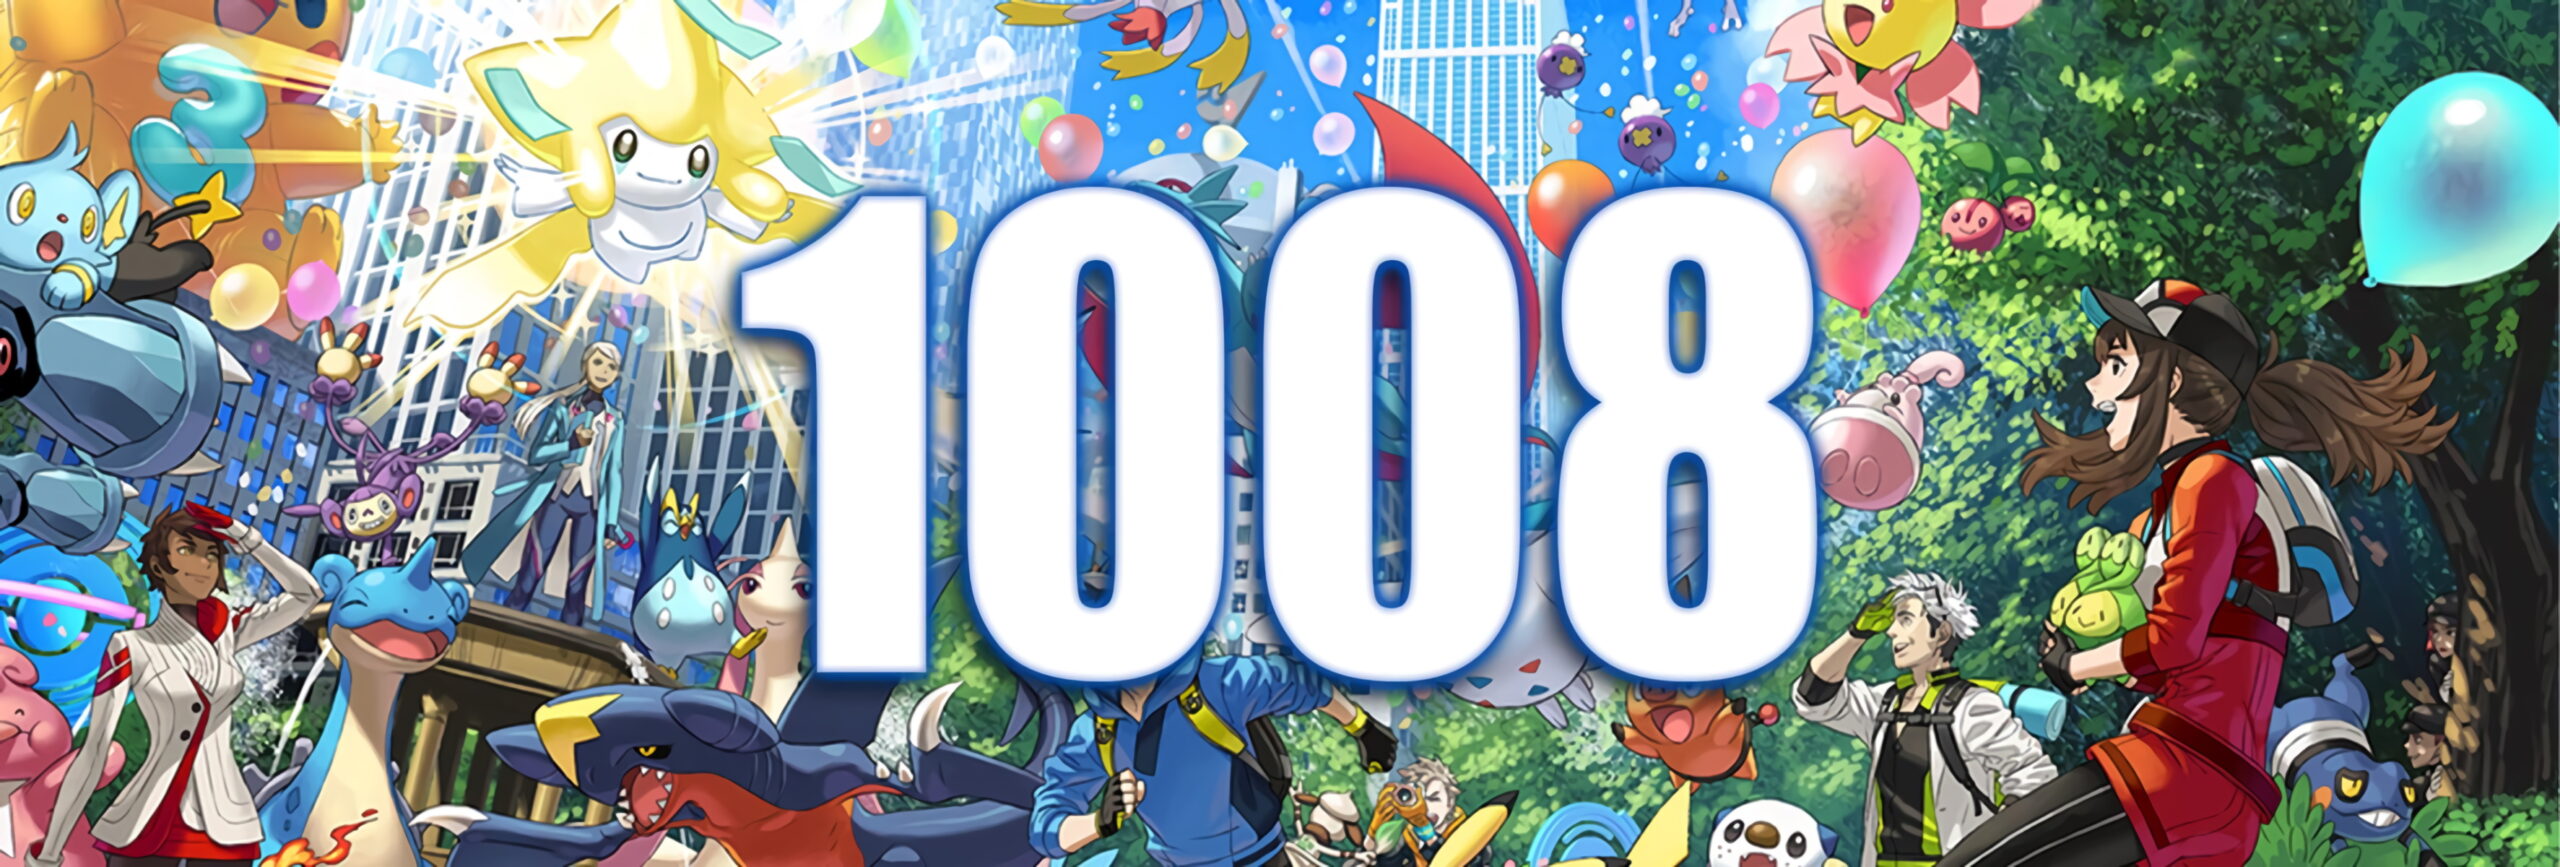 Pokémon 1008 encounters